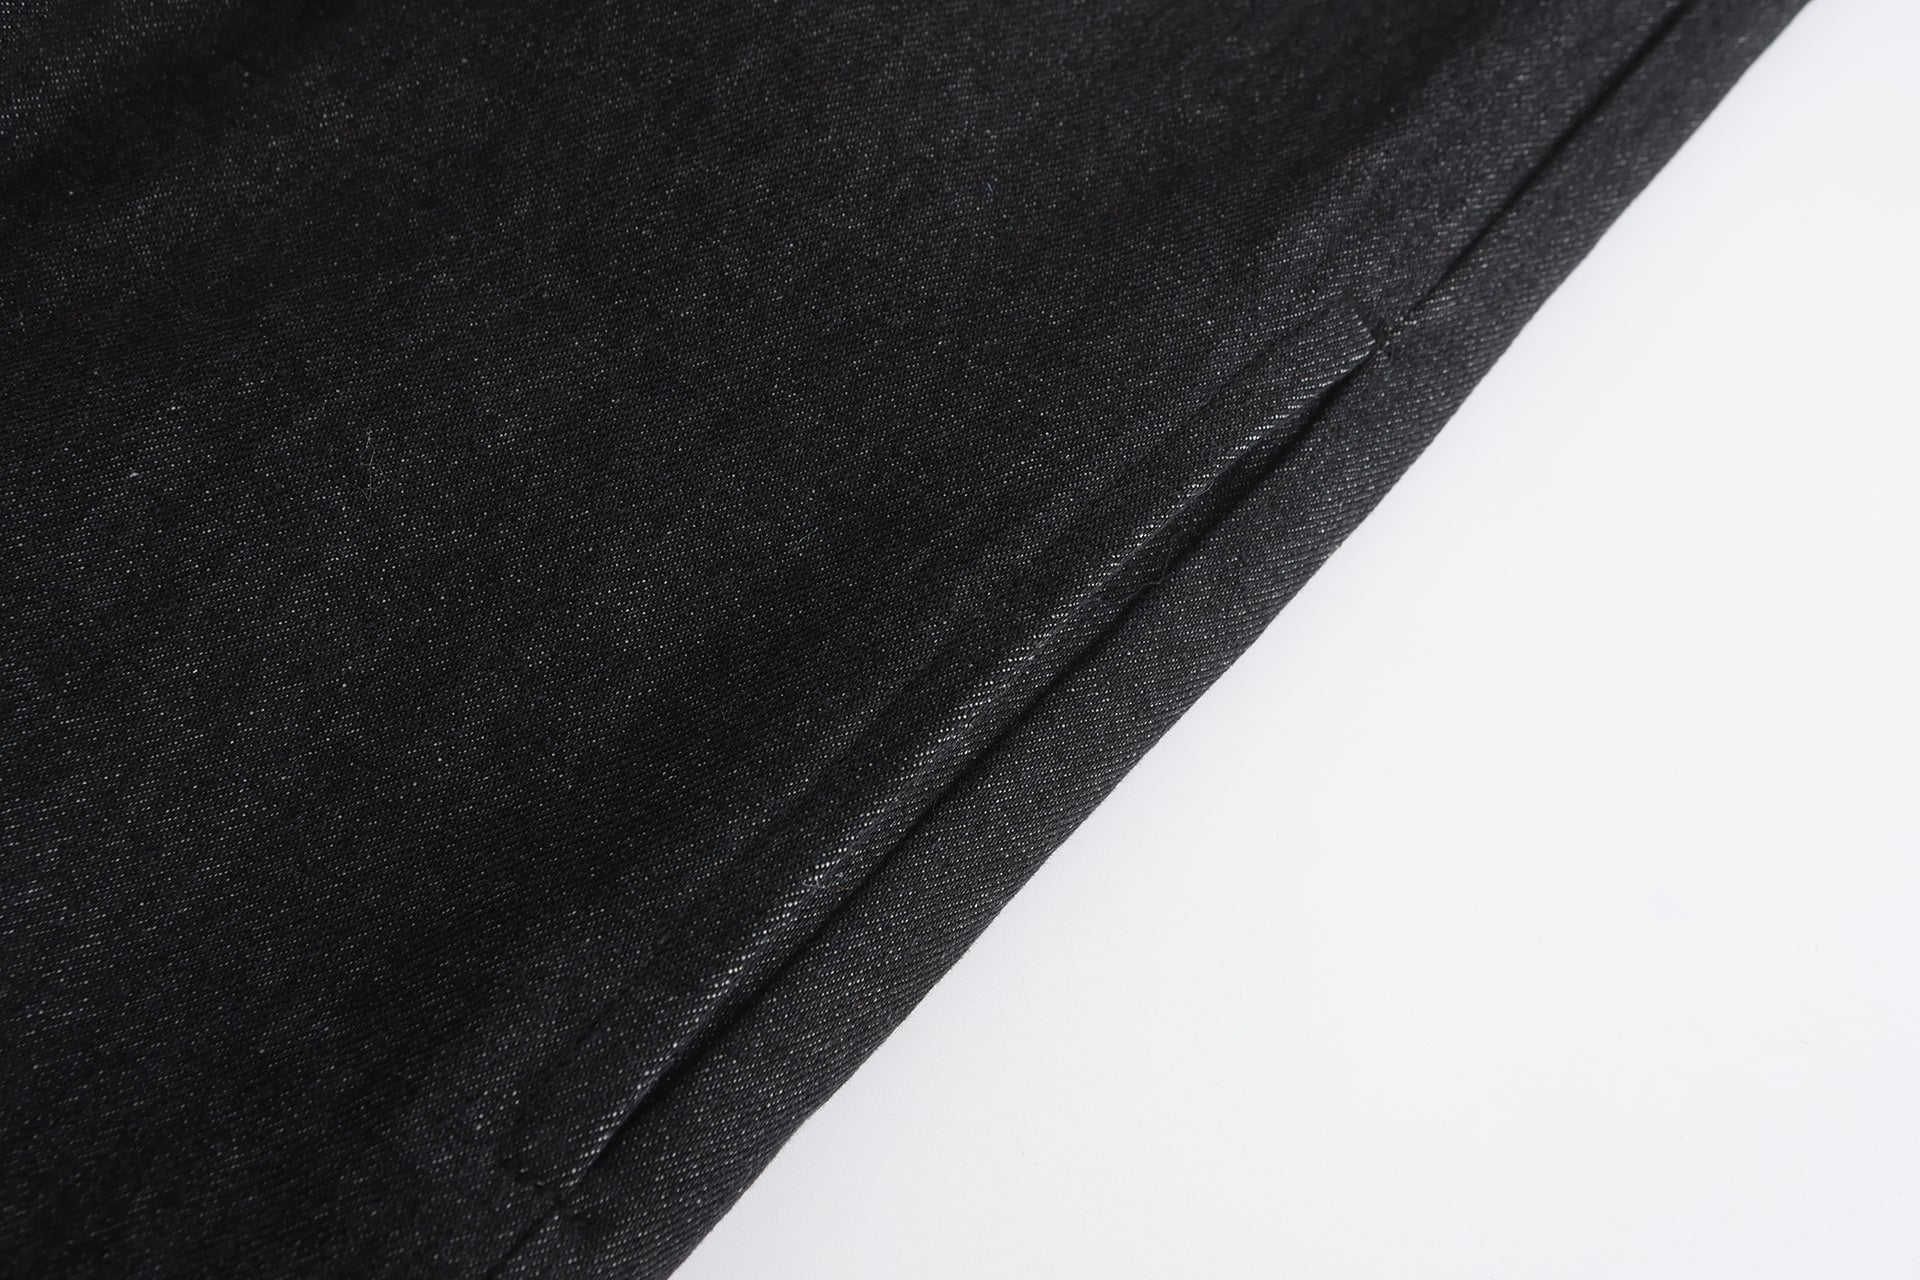 Li Patch Collar Button Oversized Coat, Contrast Black DAWANG, pocket close up